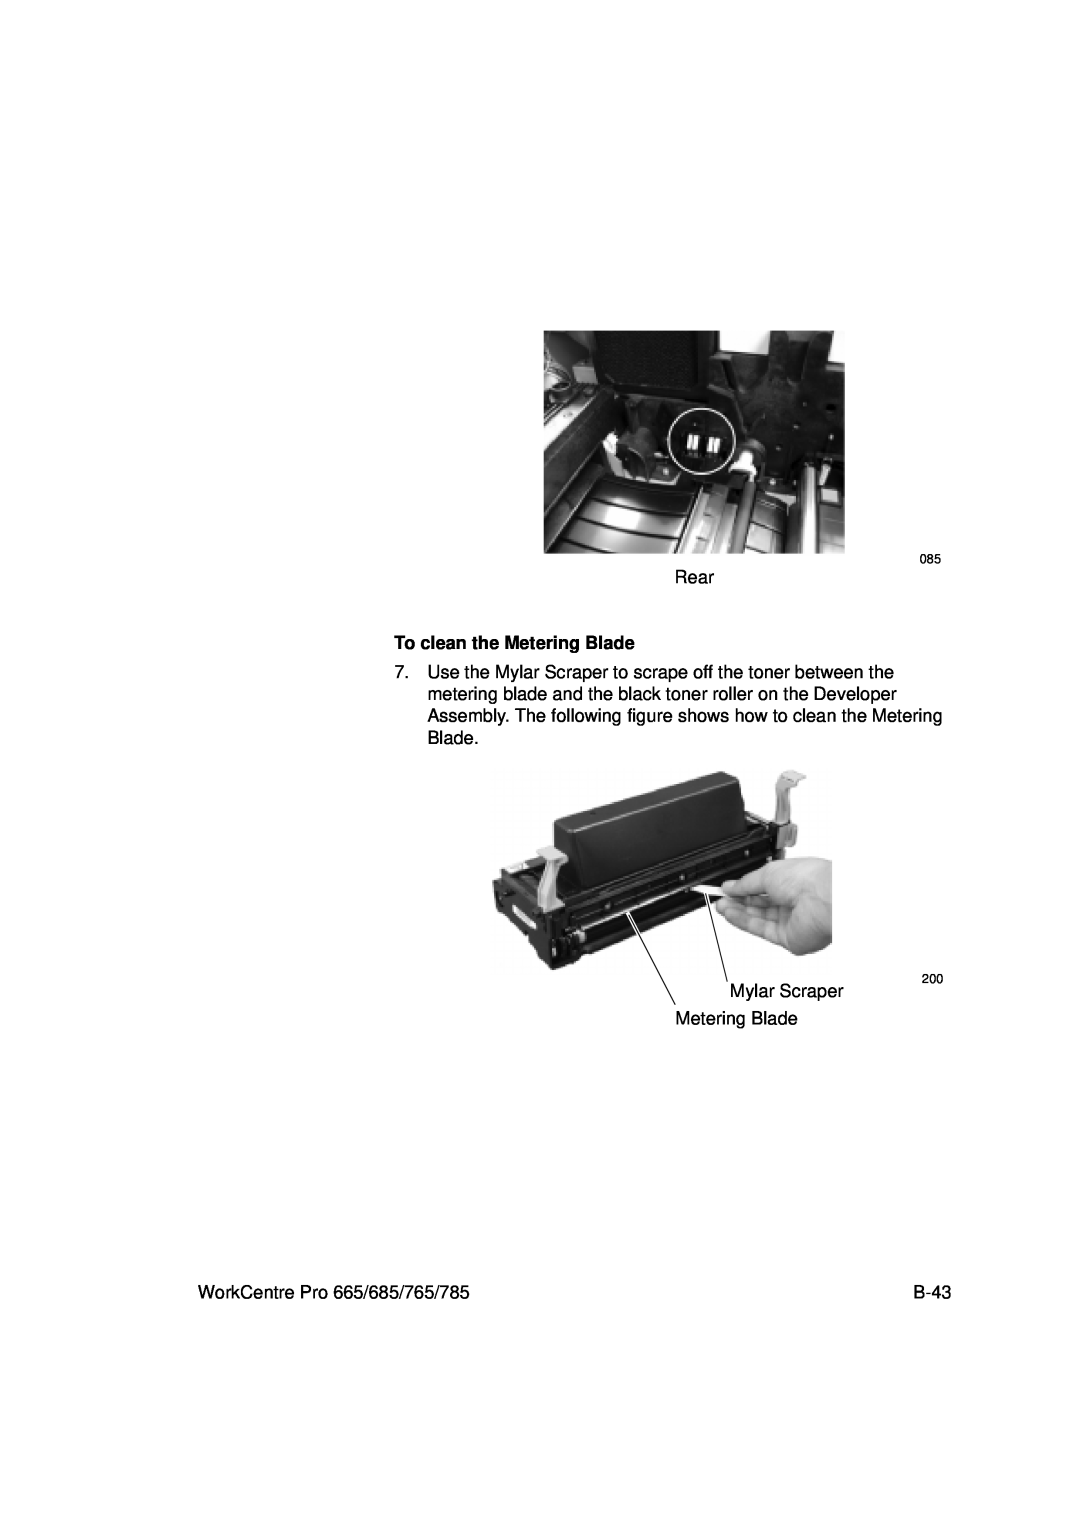 Xerox manual Rear, To clean the Metering Blade, Mylar Scraper Metering Blade, WorkCentre Pro 665/685/765/785, B-43 